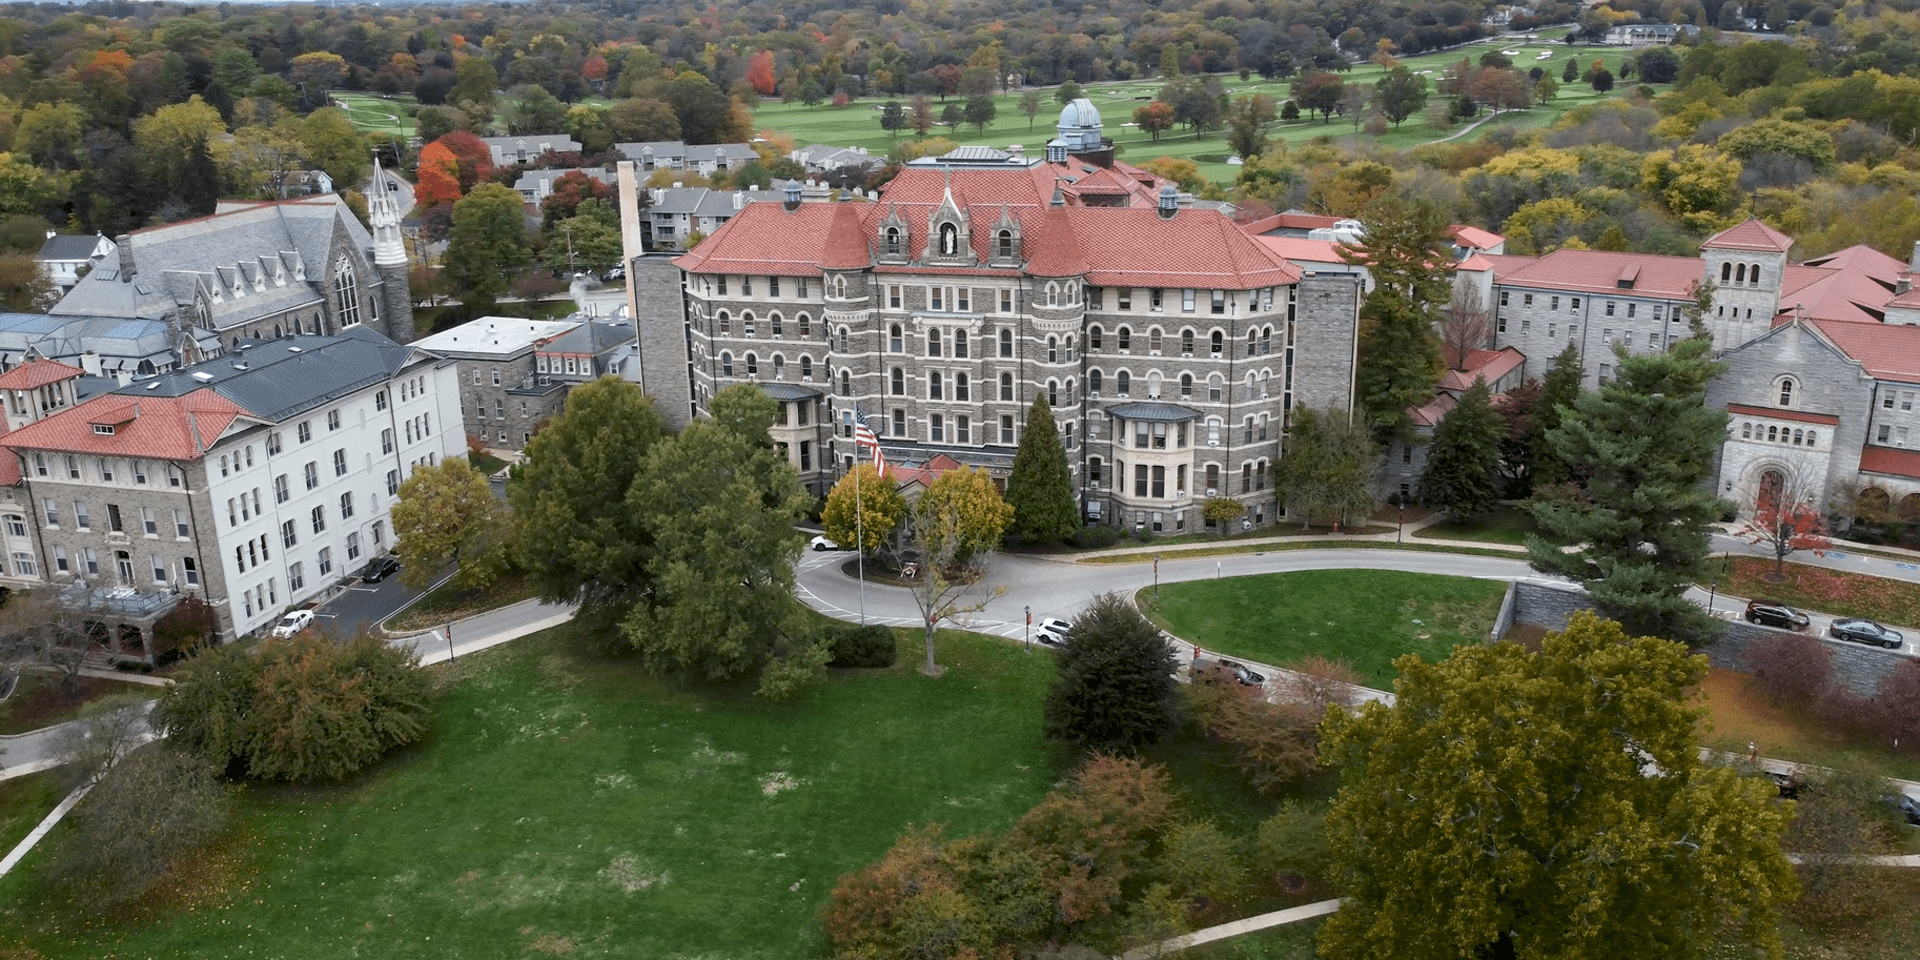 birdseye view of campus